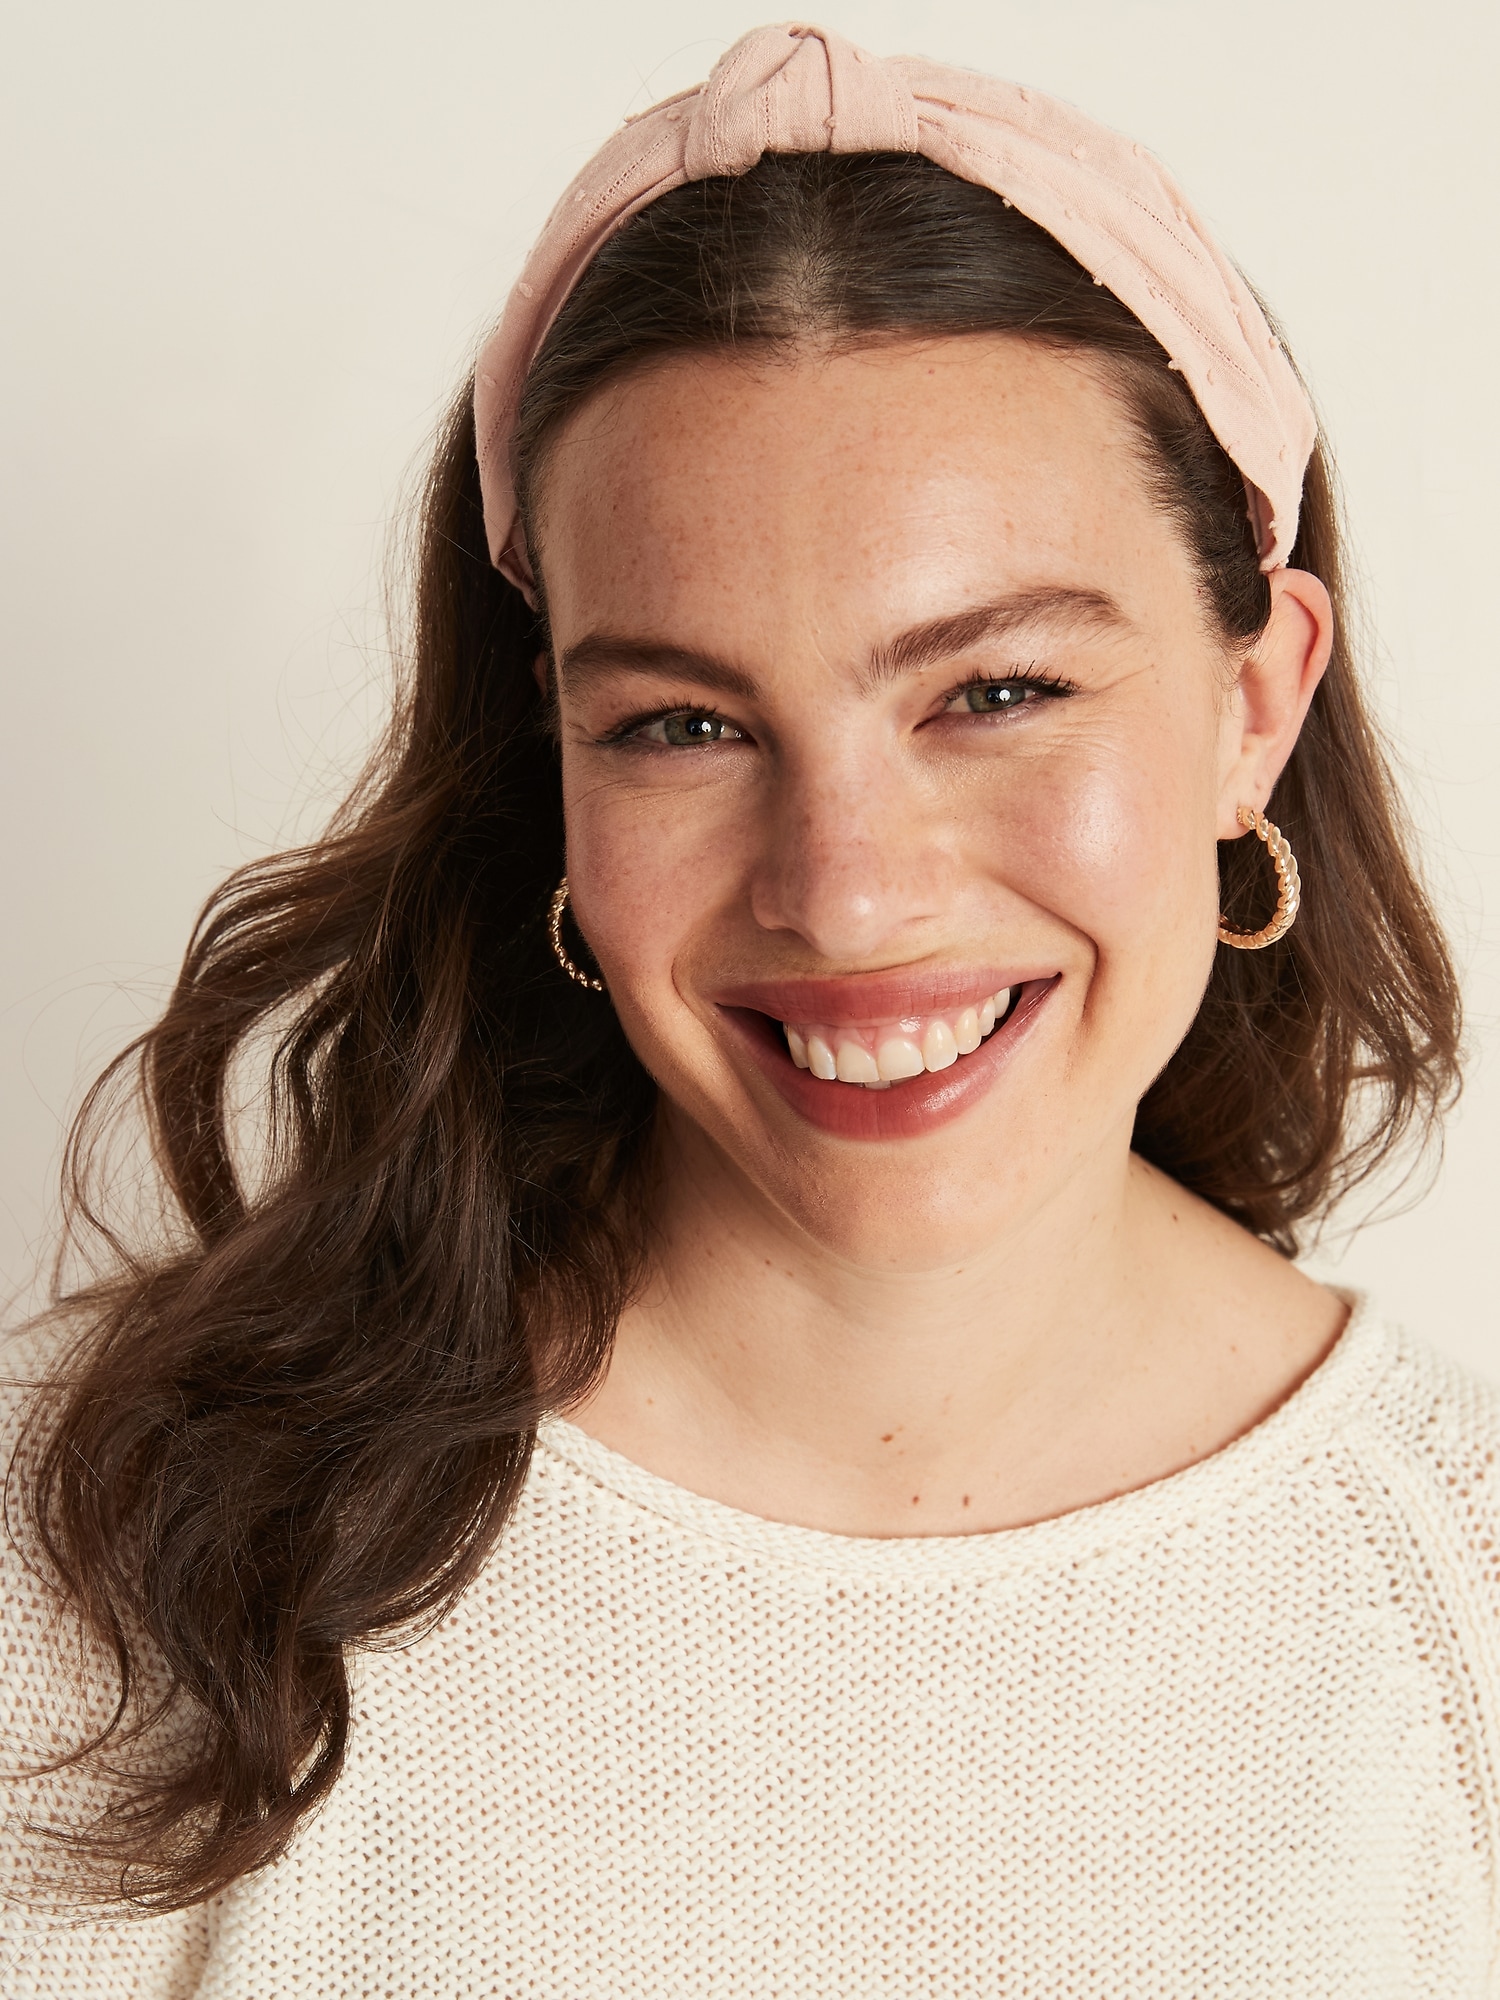 Fabric-Covered Headband For Women